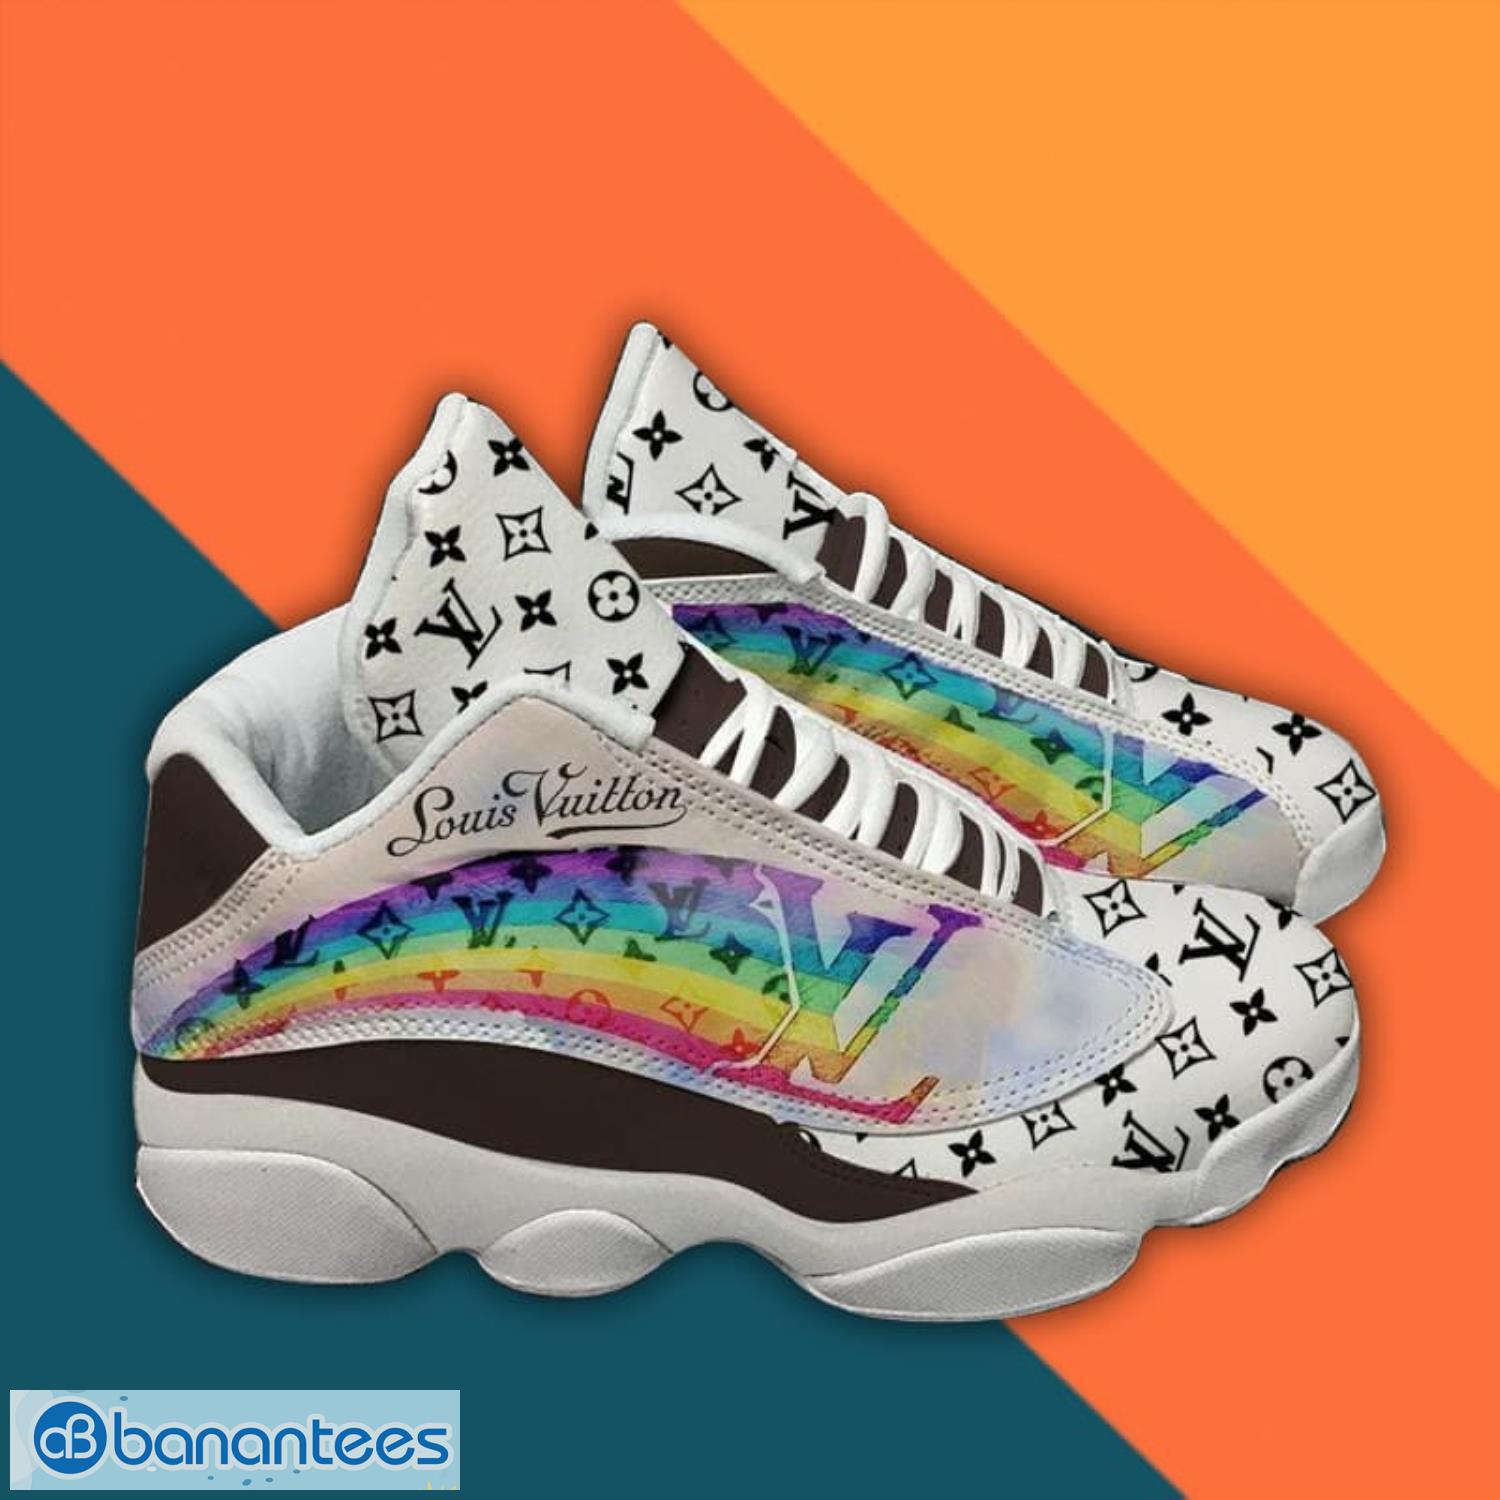 Louis Vuitton Rainbow Air Jordan 13 Sneaker Shoes Product Photo 1